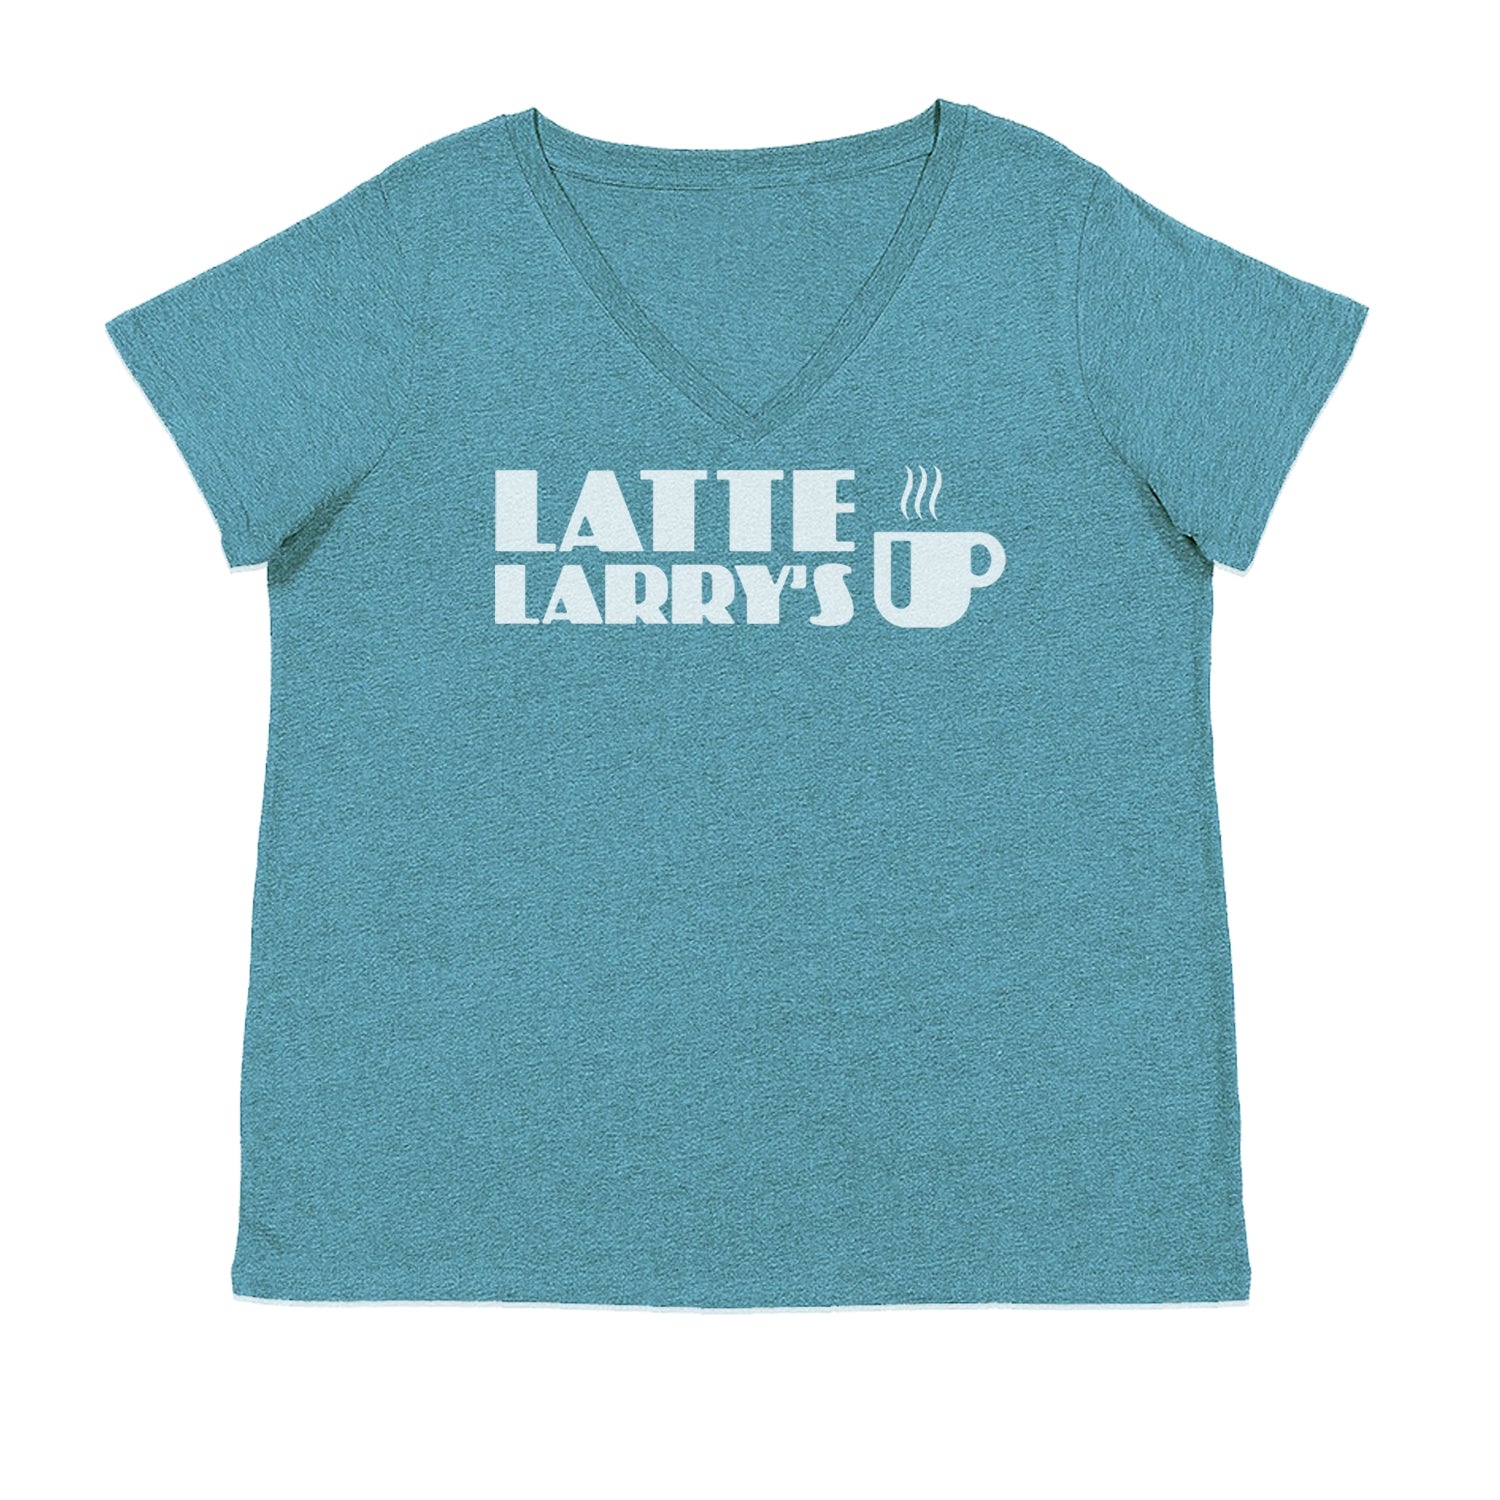 Latte Larry's Enthusiastic Coffee Ladies V-Neck T-shirt Surf